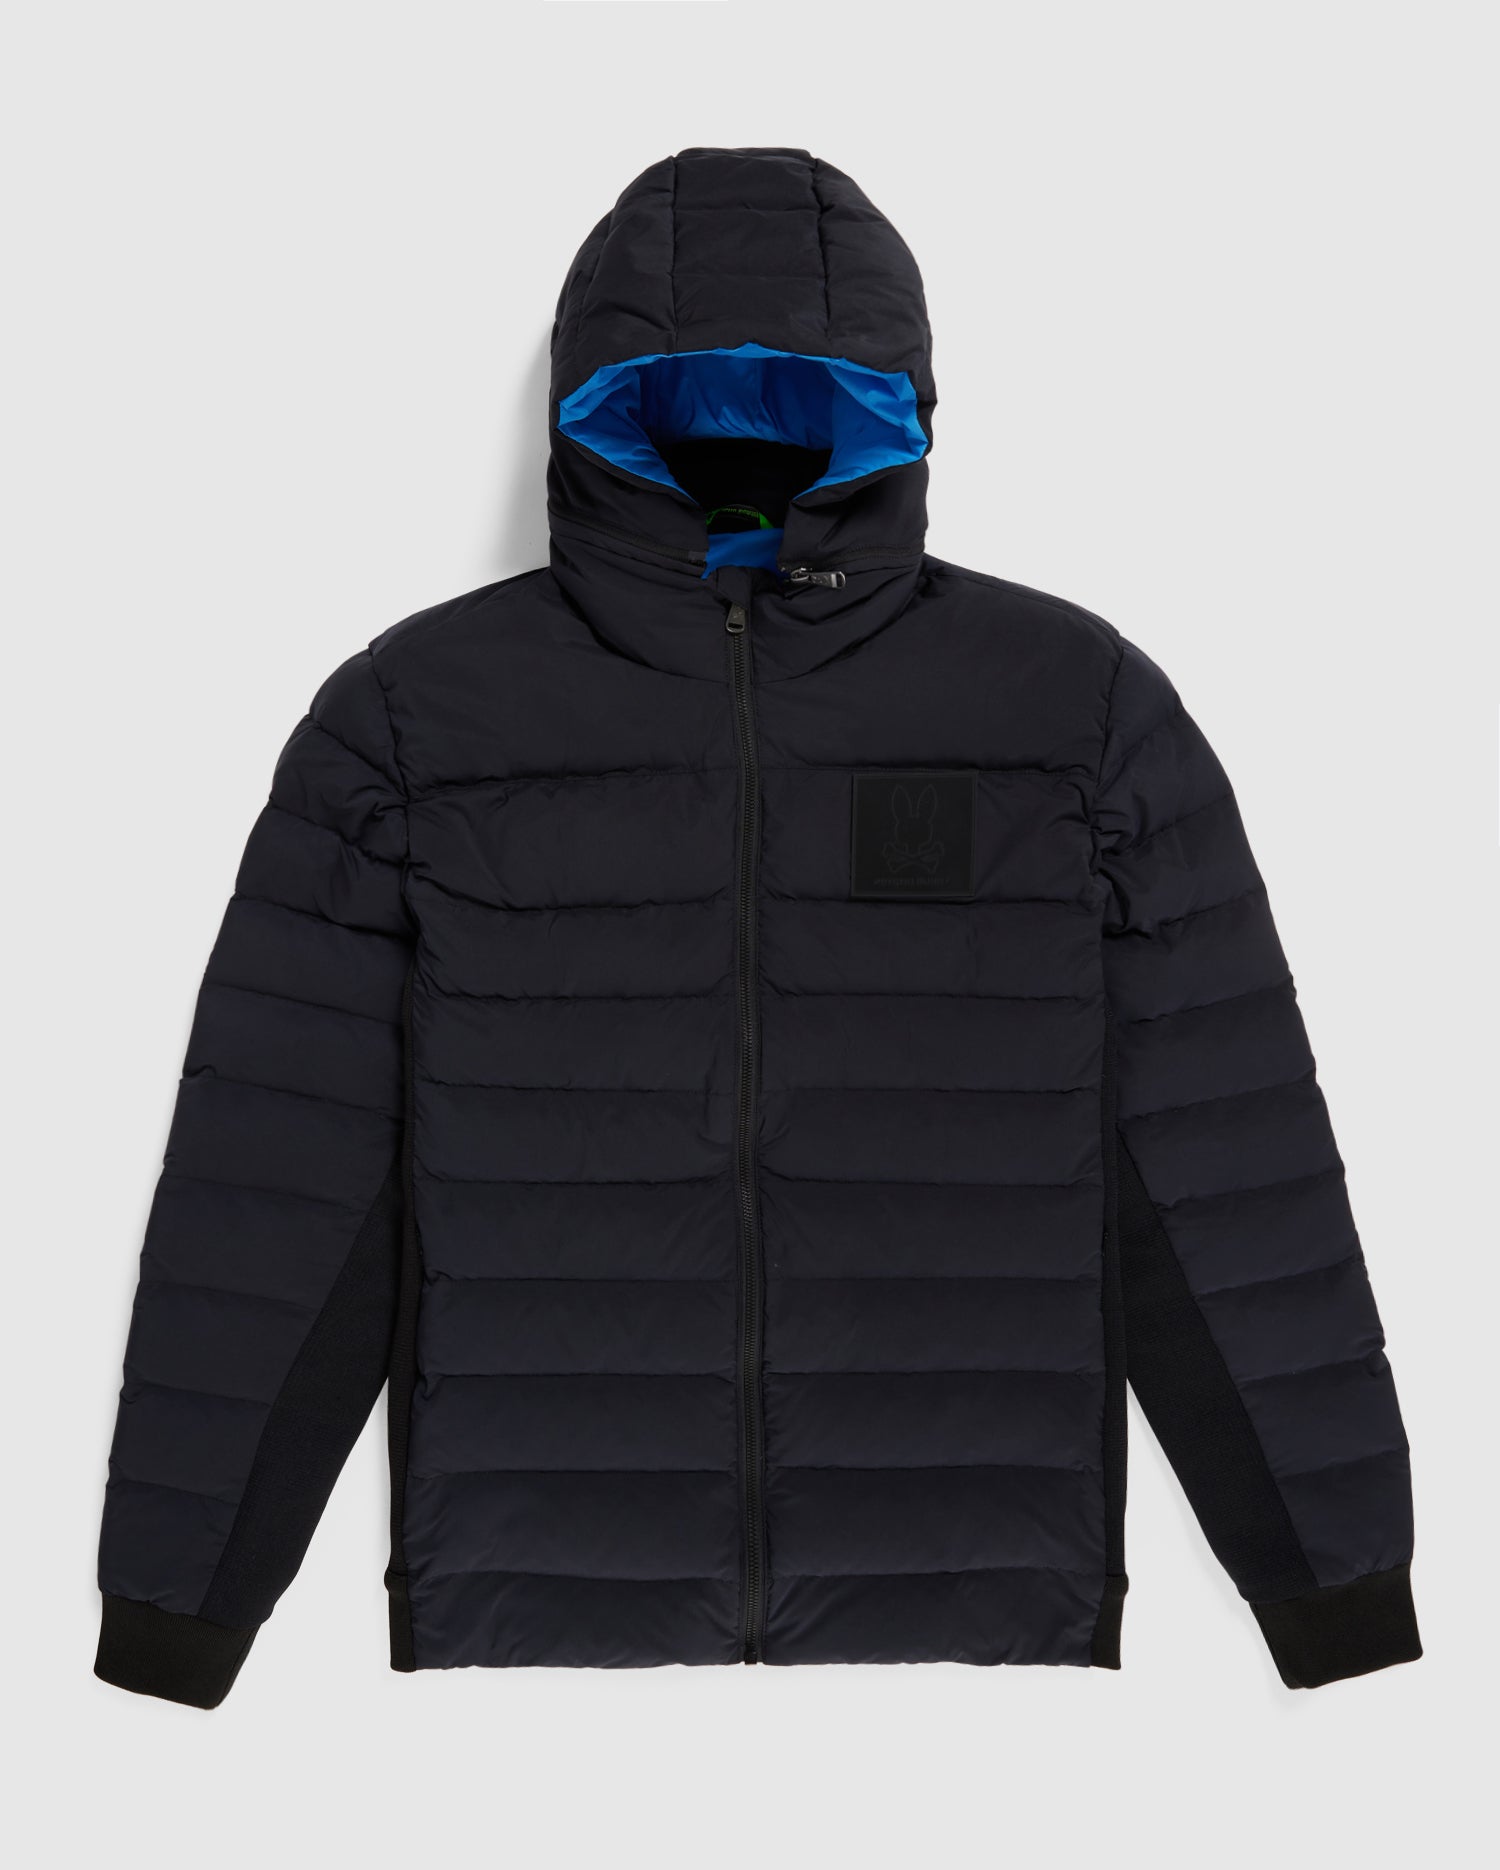 Wantdo Men's Plus Size Winter Jacket Insulated Puffy Coat Windproof Puffer  Jacket Black 2XL - Walmart.com